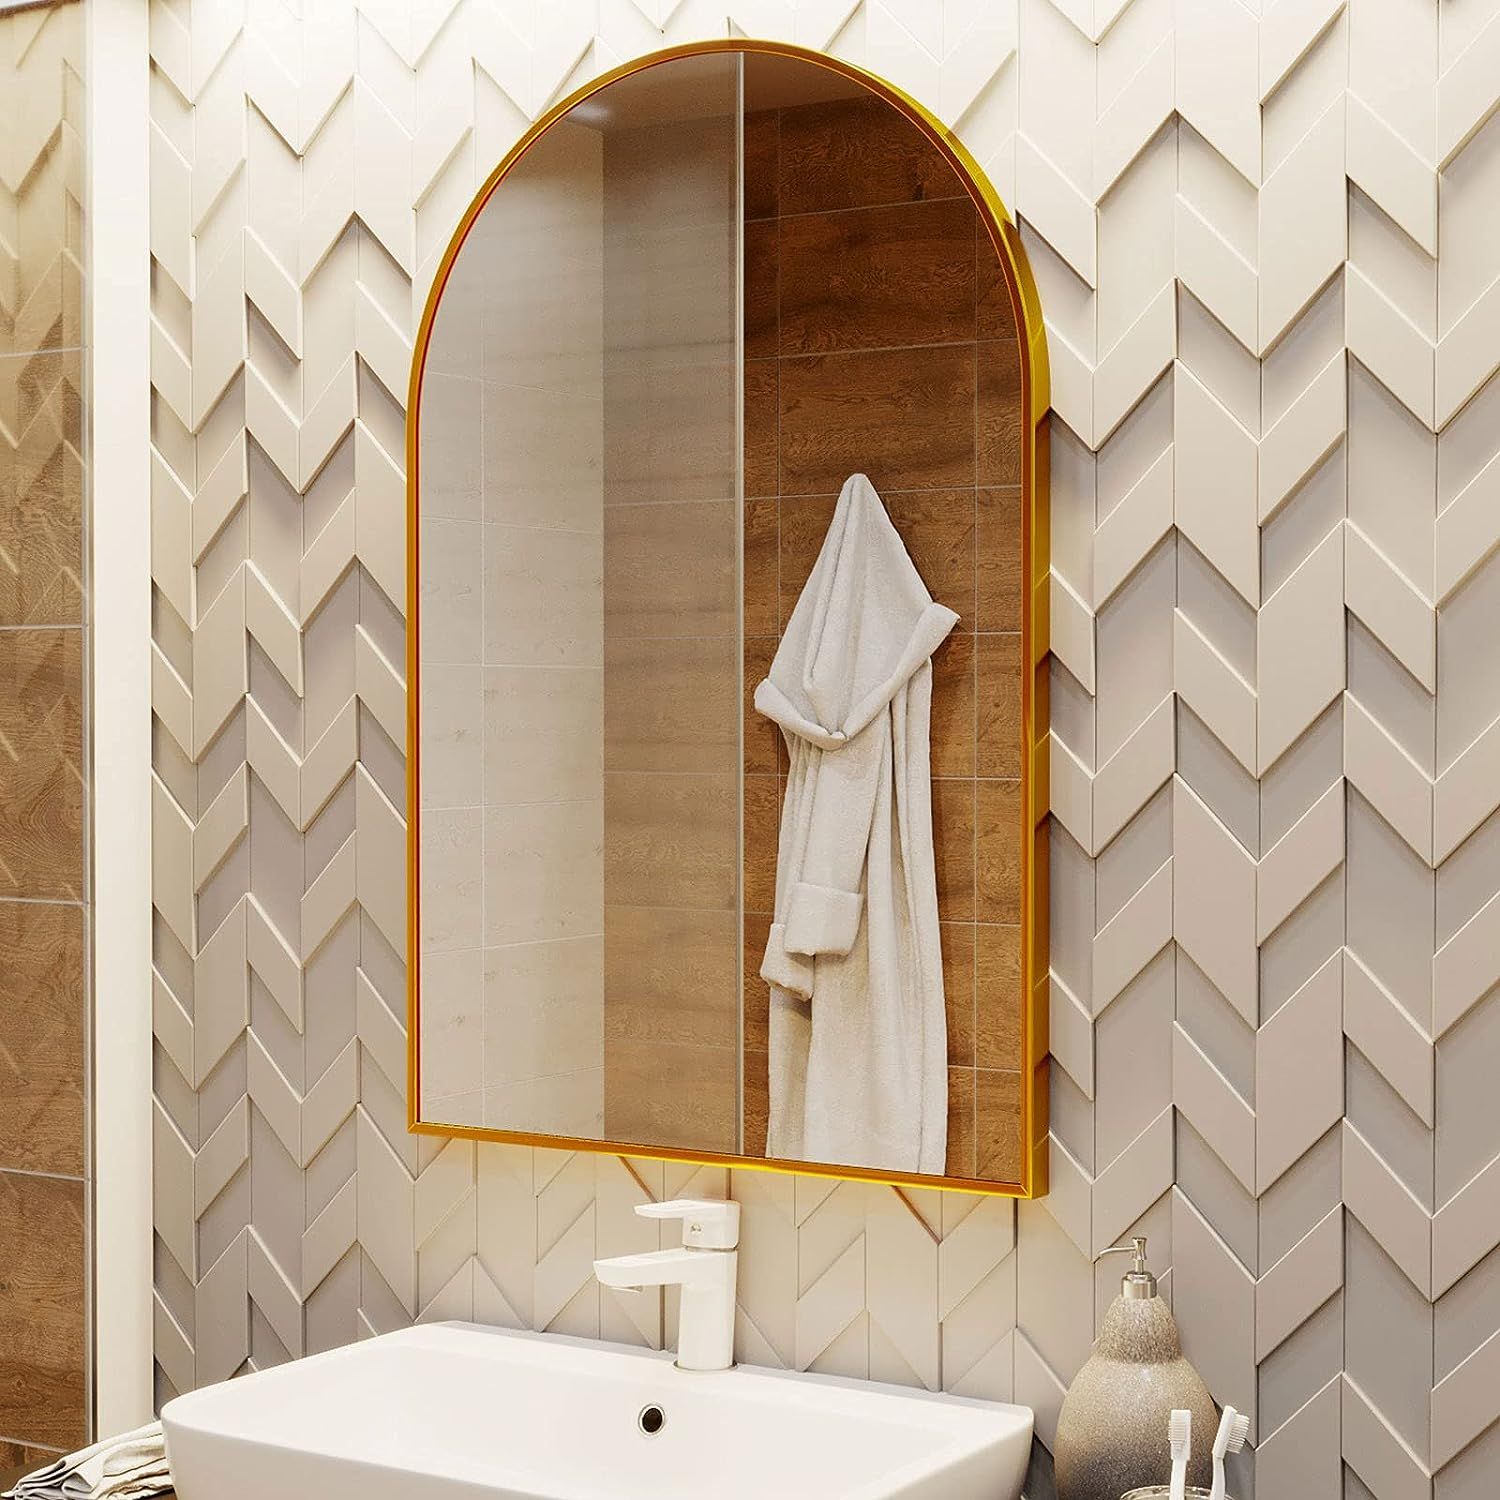 BEAUTYPEAK Wall Mounted Mirror, 24 inchx36 inch Arch Bathroom Mirror, Gold Vanity Wall Mirror w/ ... | Amazon (US)